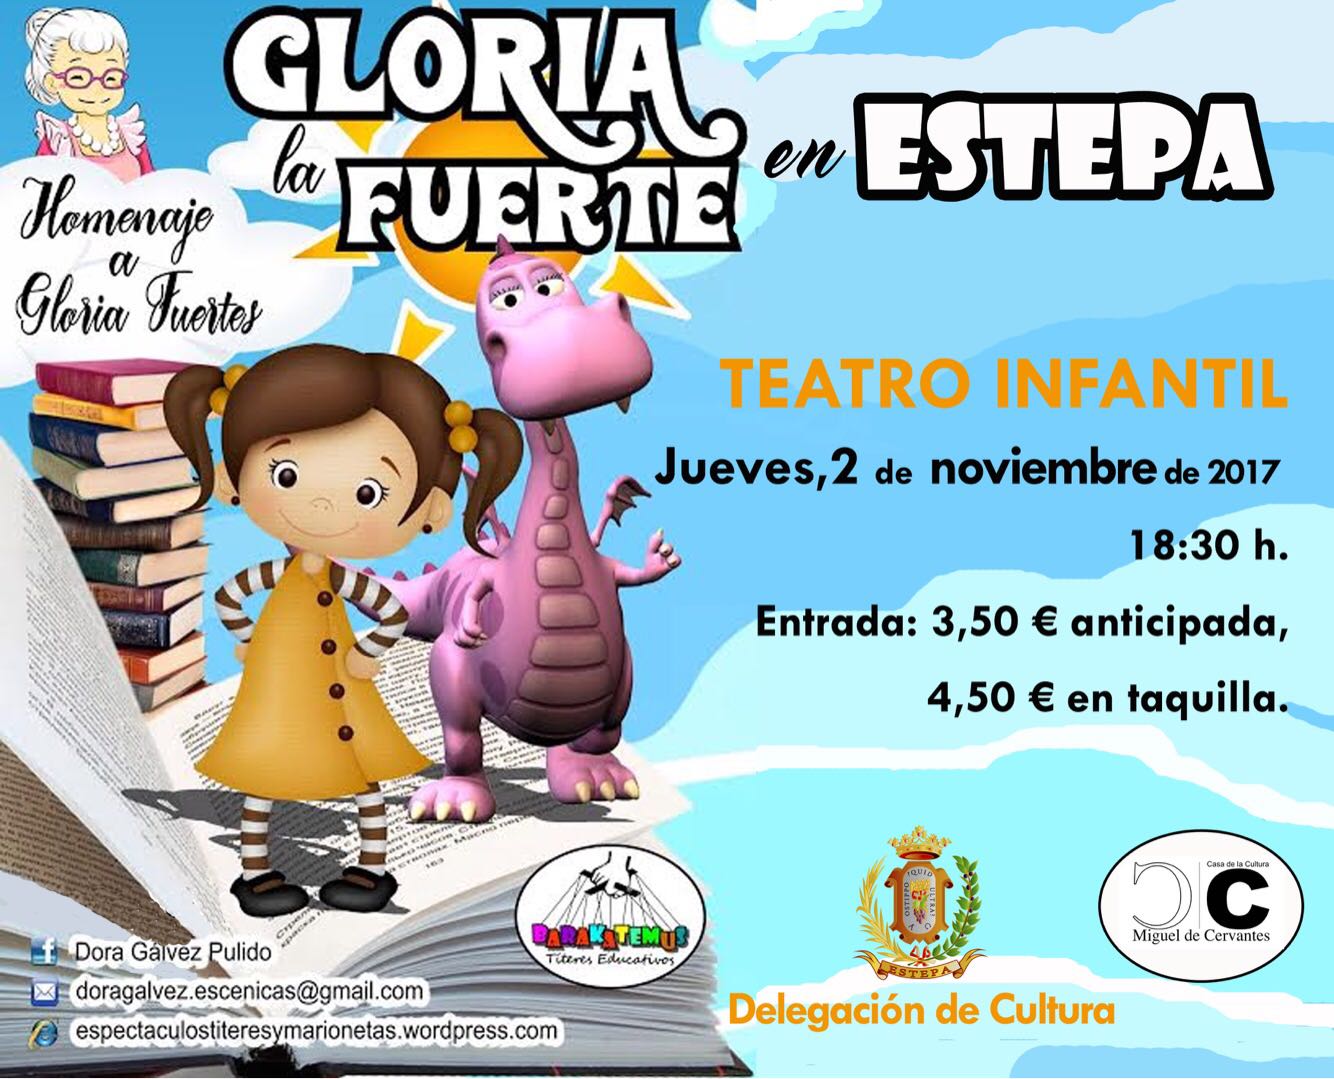 Teatro infantil en Estepa: "Gloria la Fuerte"